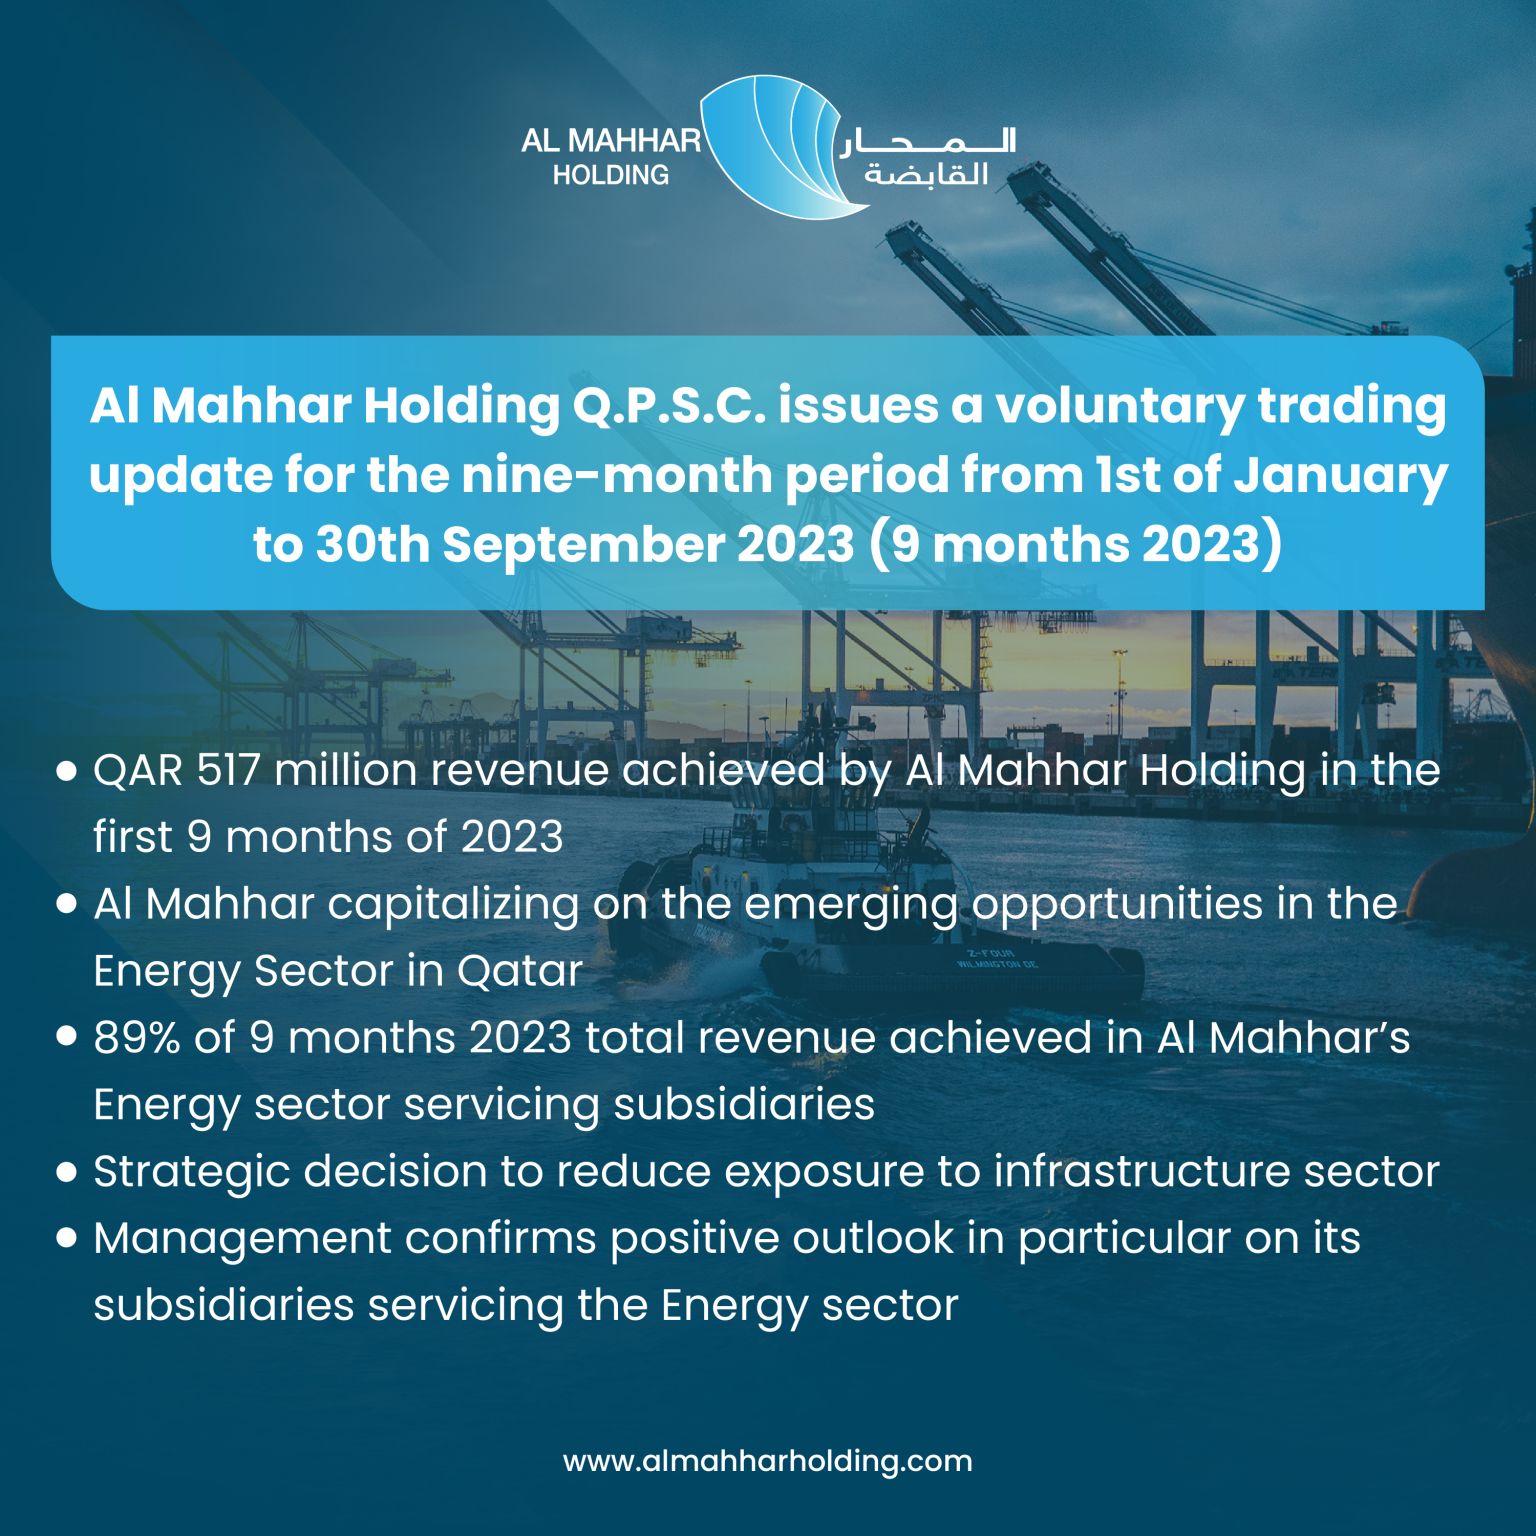 Al Mahhar Energy Subsidiaries Generate 89% of Revenue